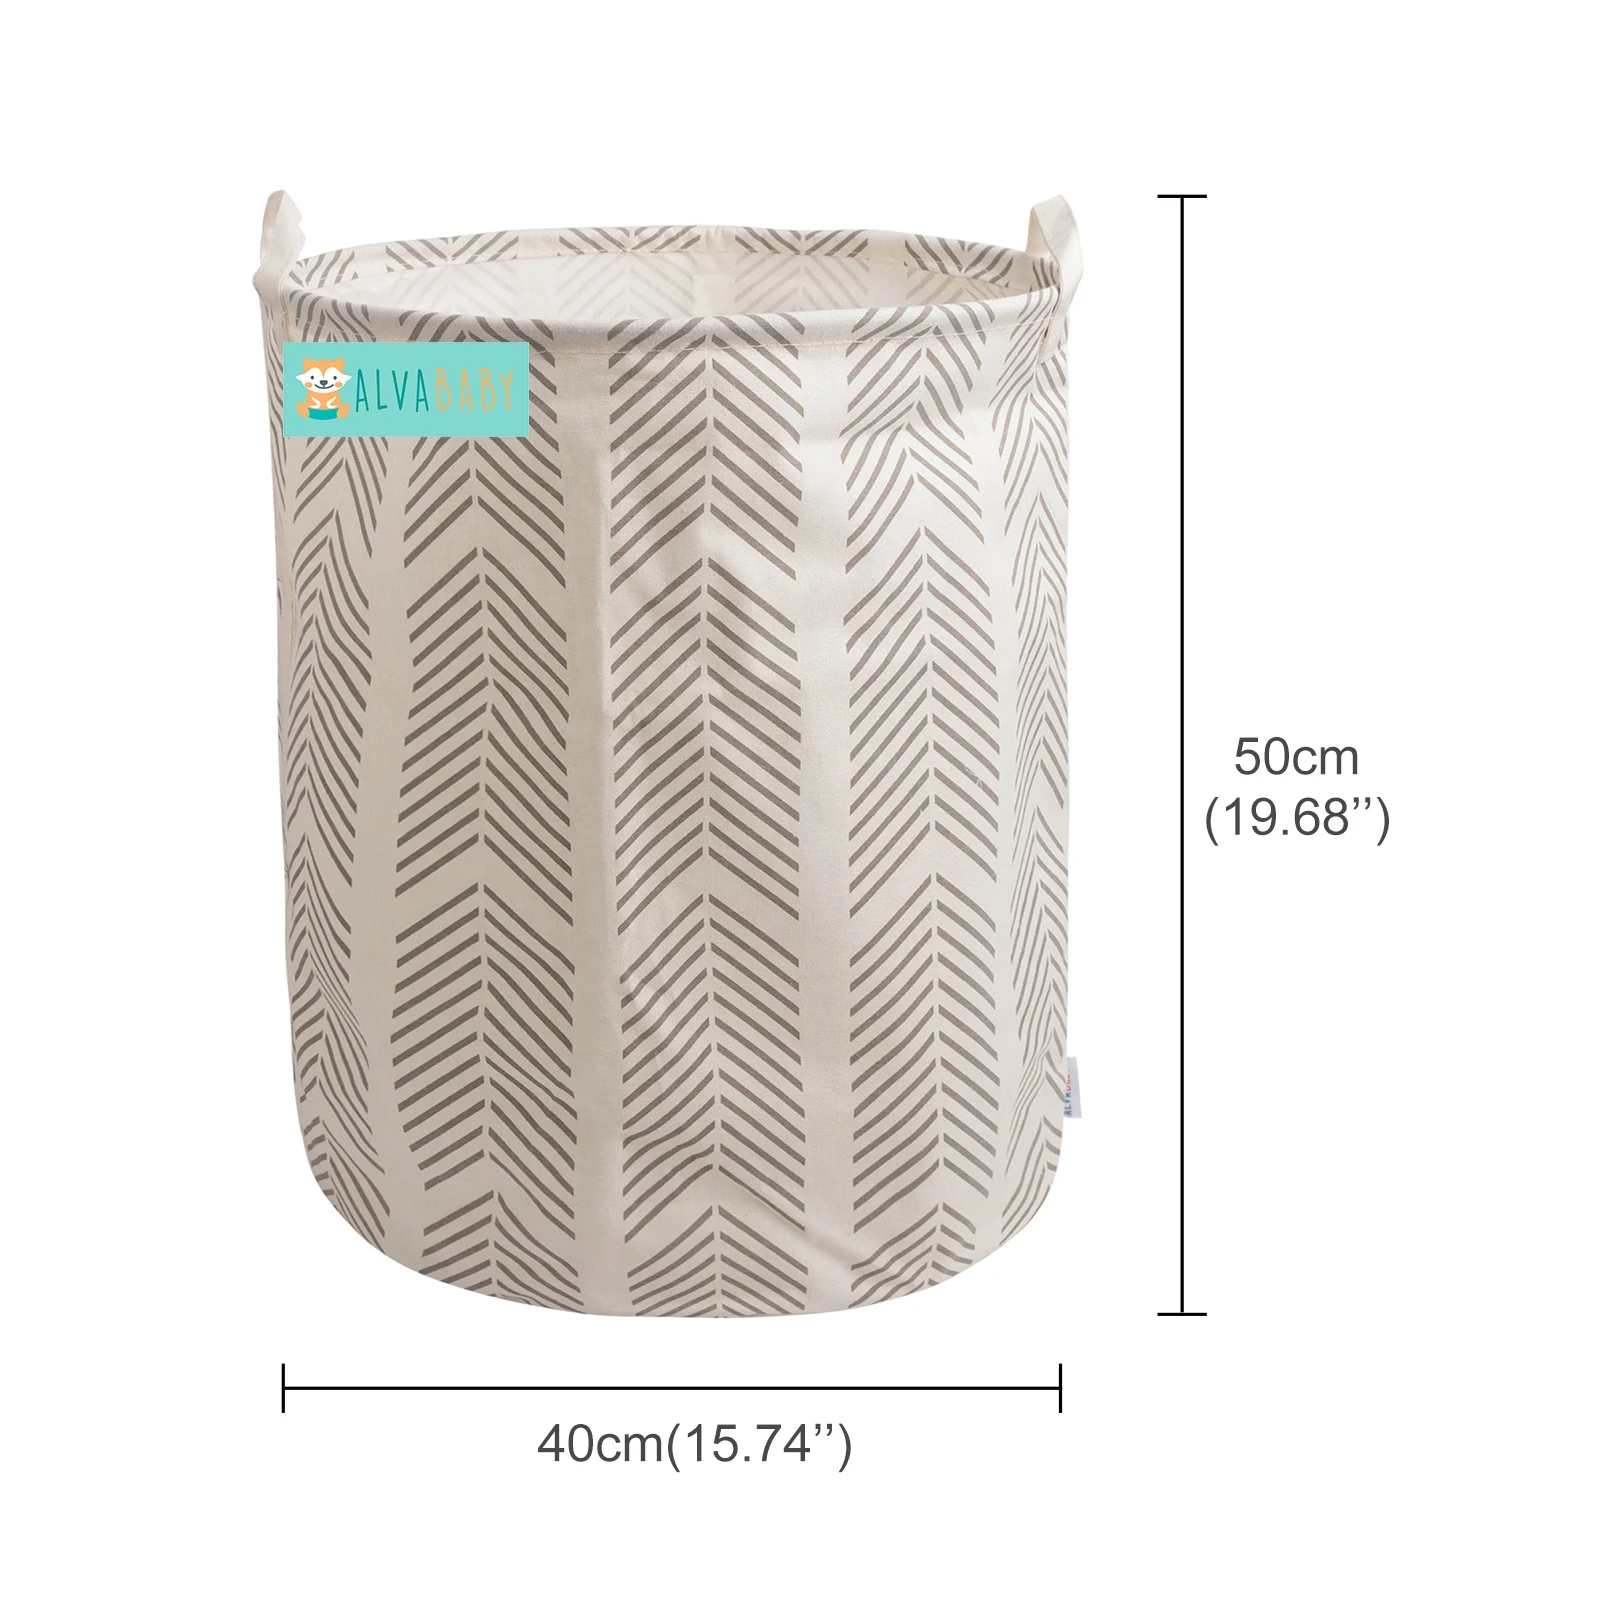 ALVABABY Colapsable Multifunction Eco Storage Friendly Foldable Laundry Basket